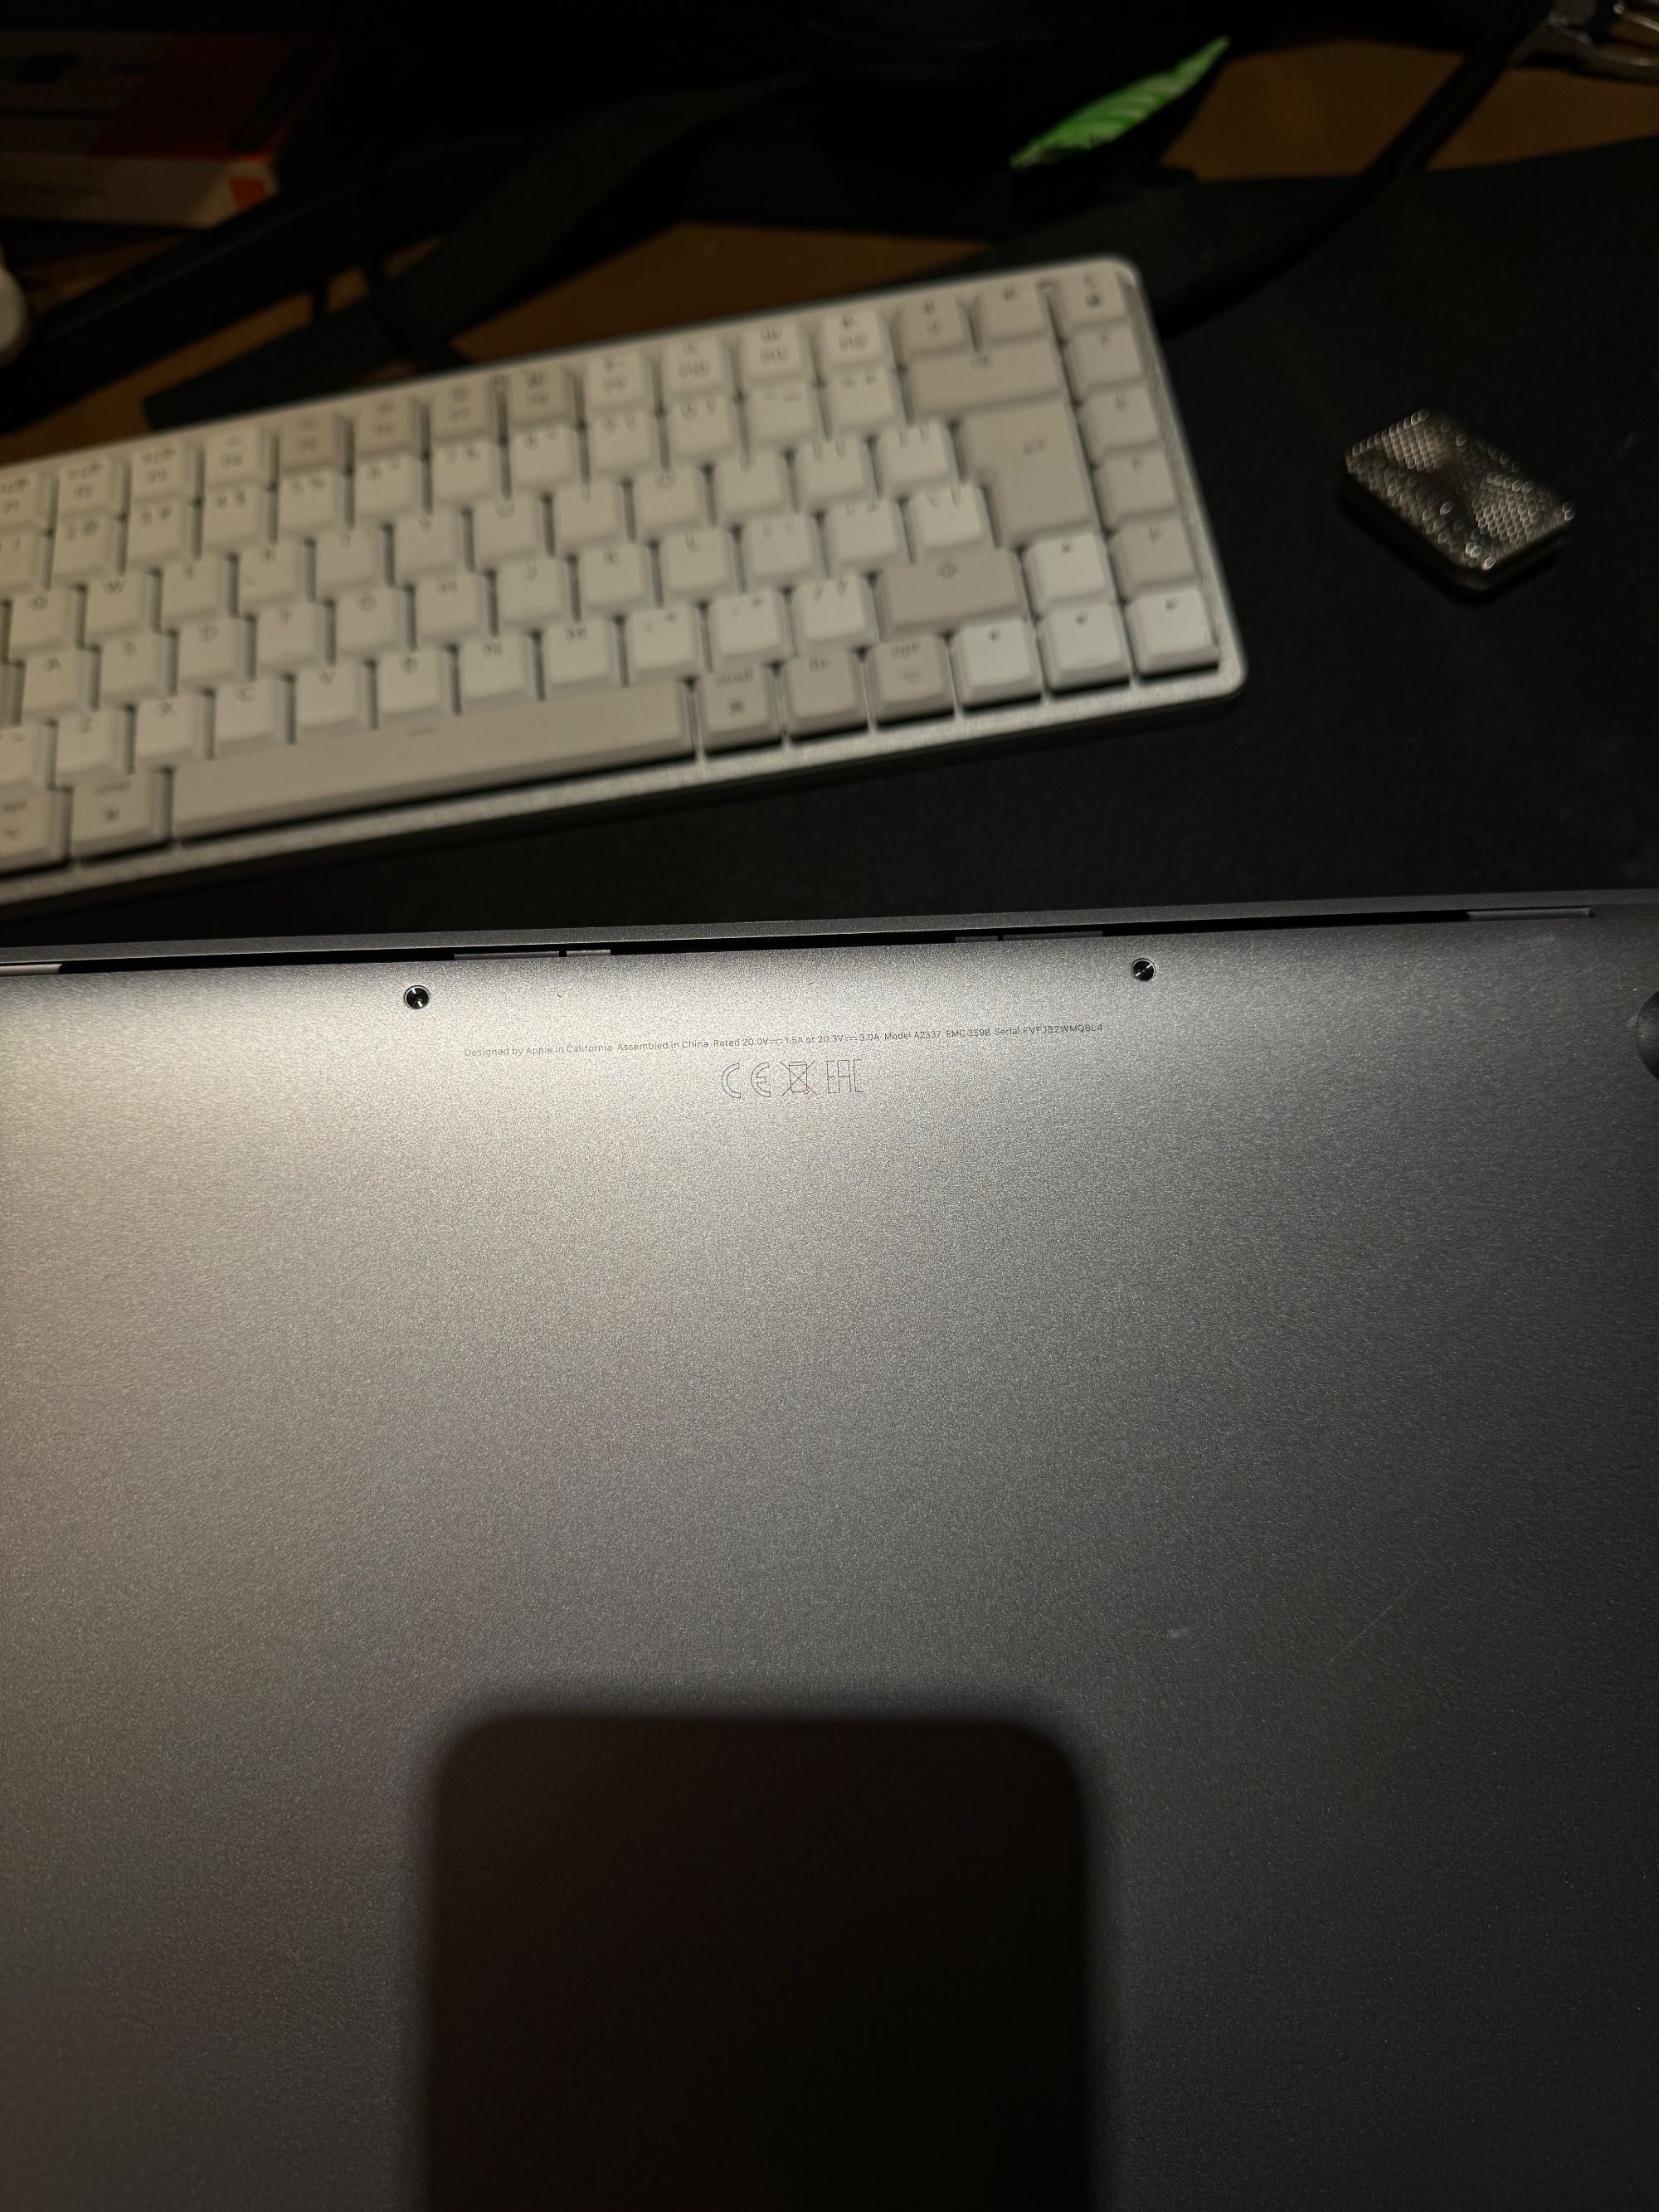 M1 MacBook Air 97% battery health 250GB 13inch 8 GB - Space Gray